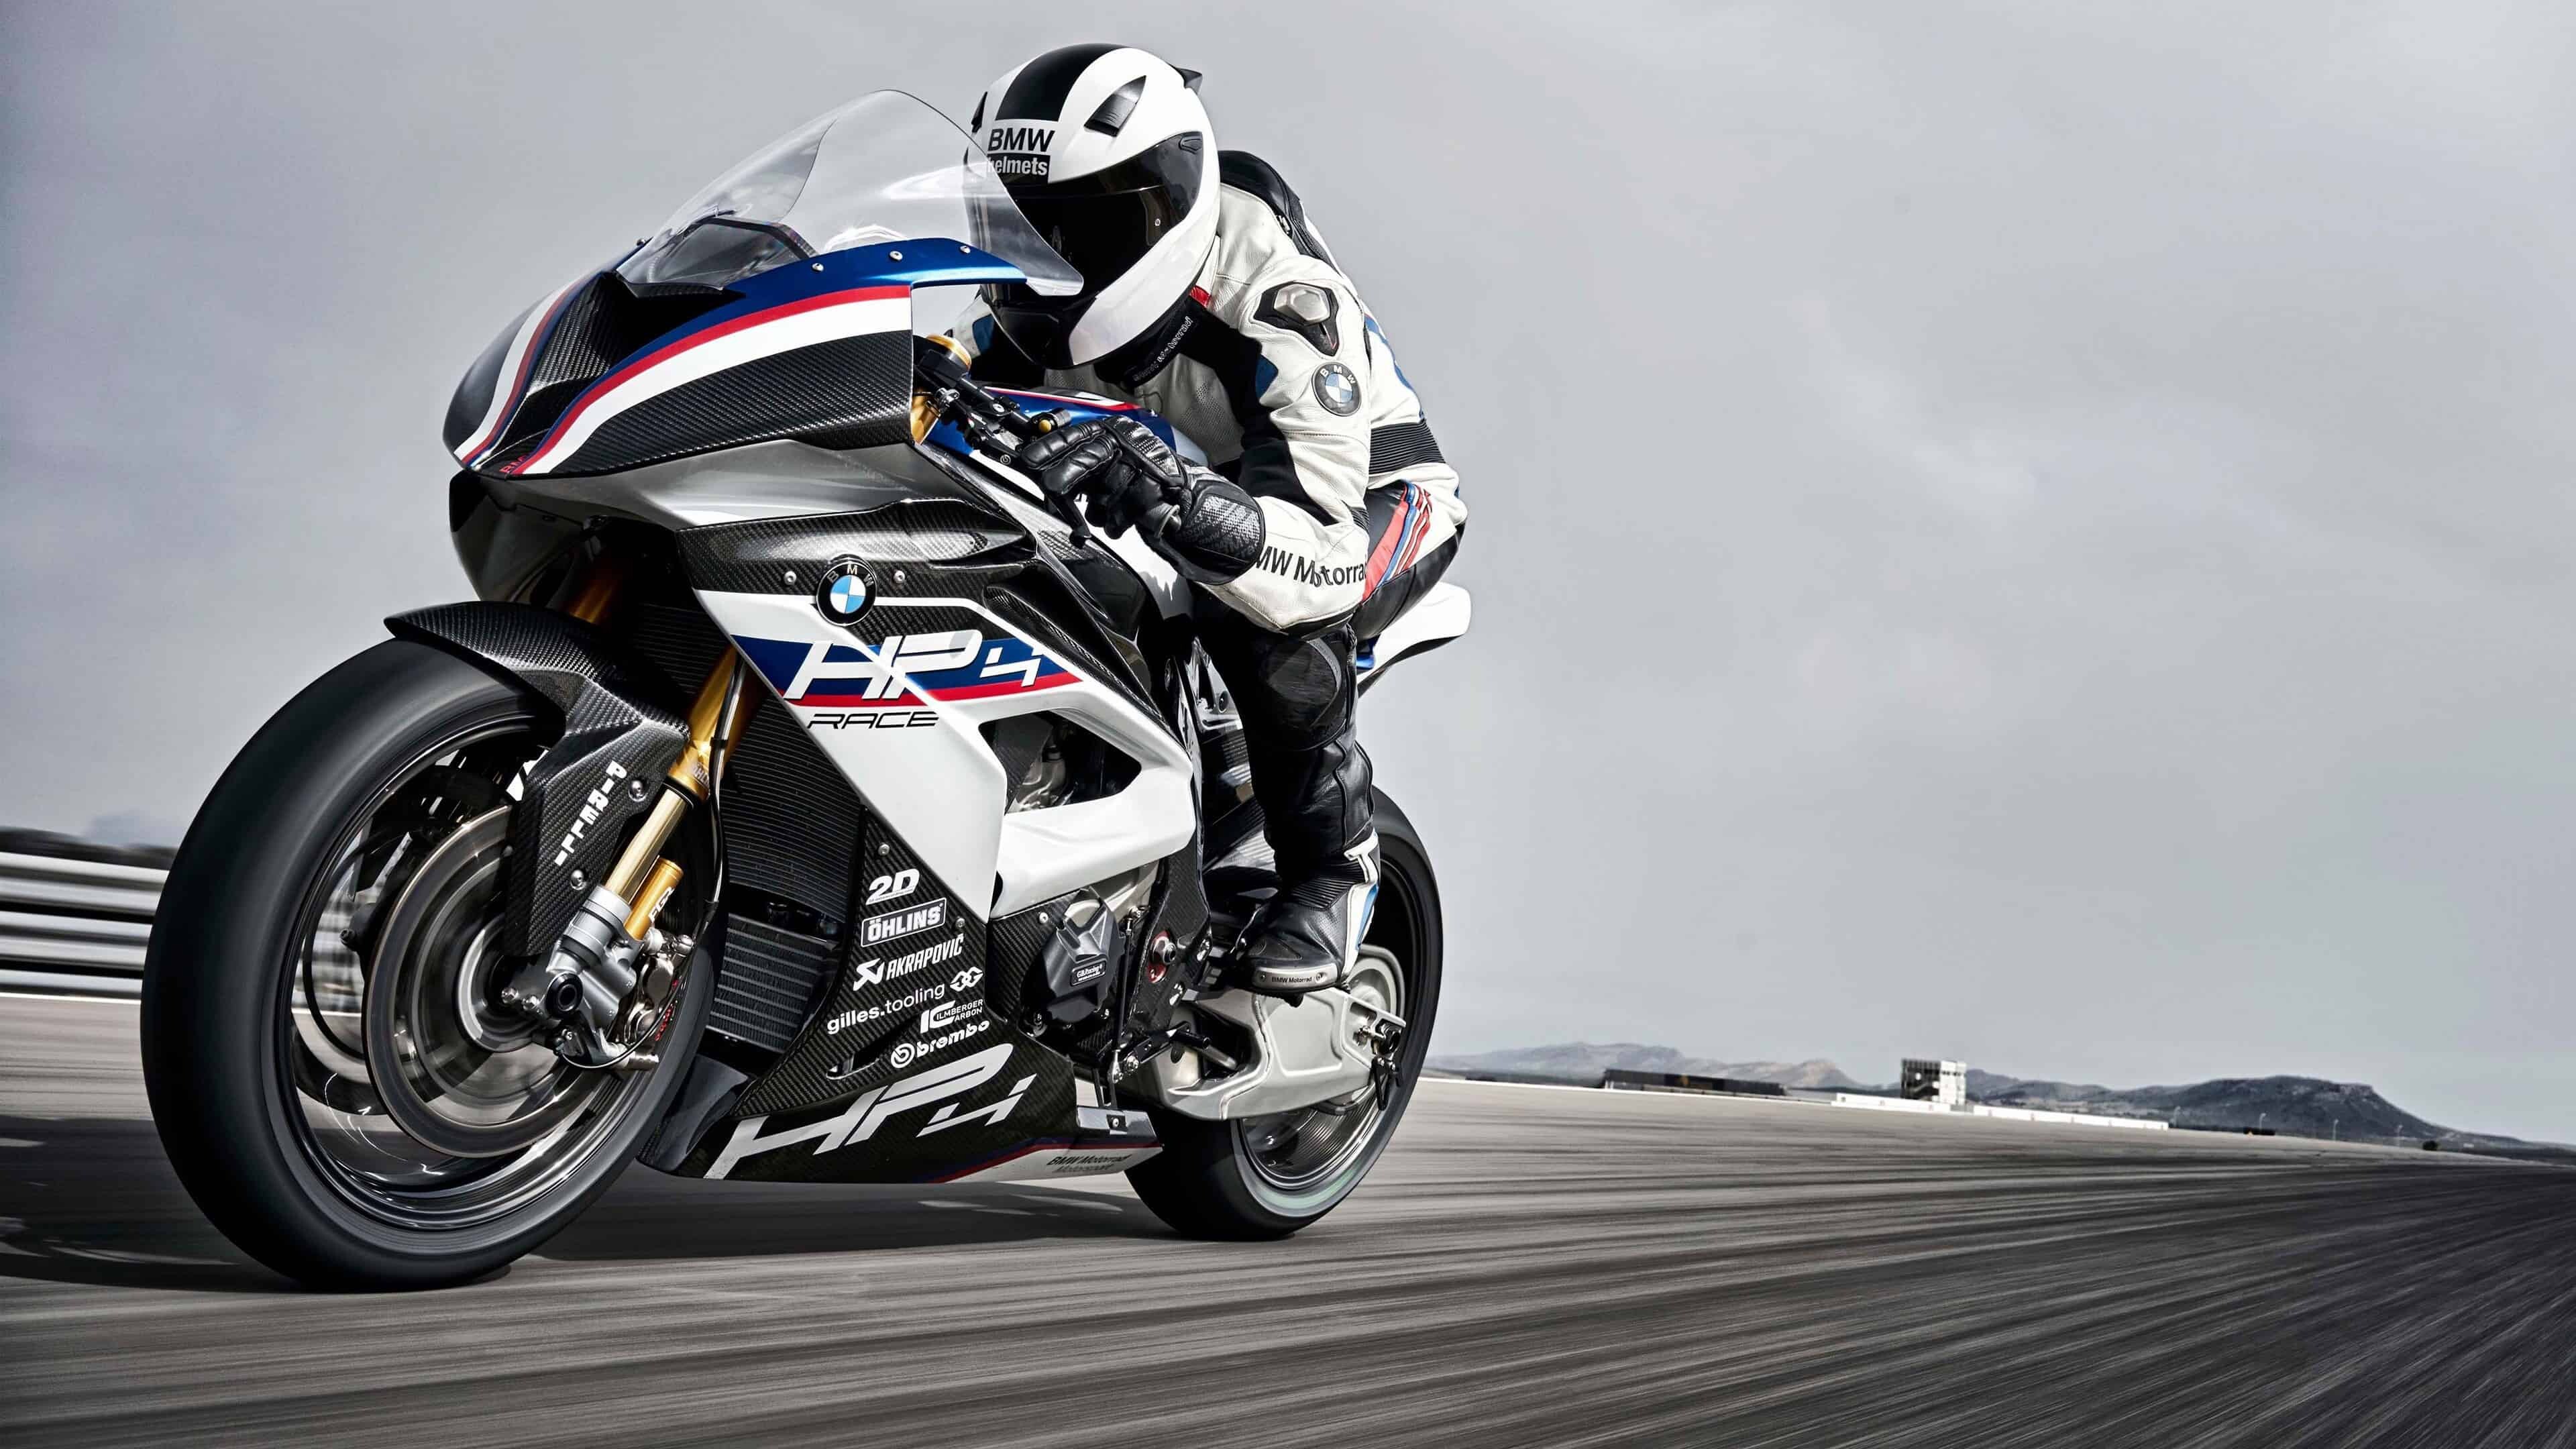 Bike: BMW HP4 Race, A 999 cc (61.0 cu in) four-cylinder engine sport motorcycle. 3840x2160 4K Background.